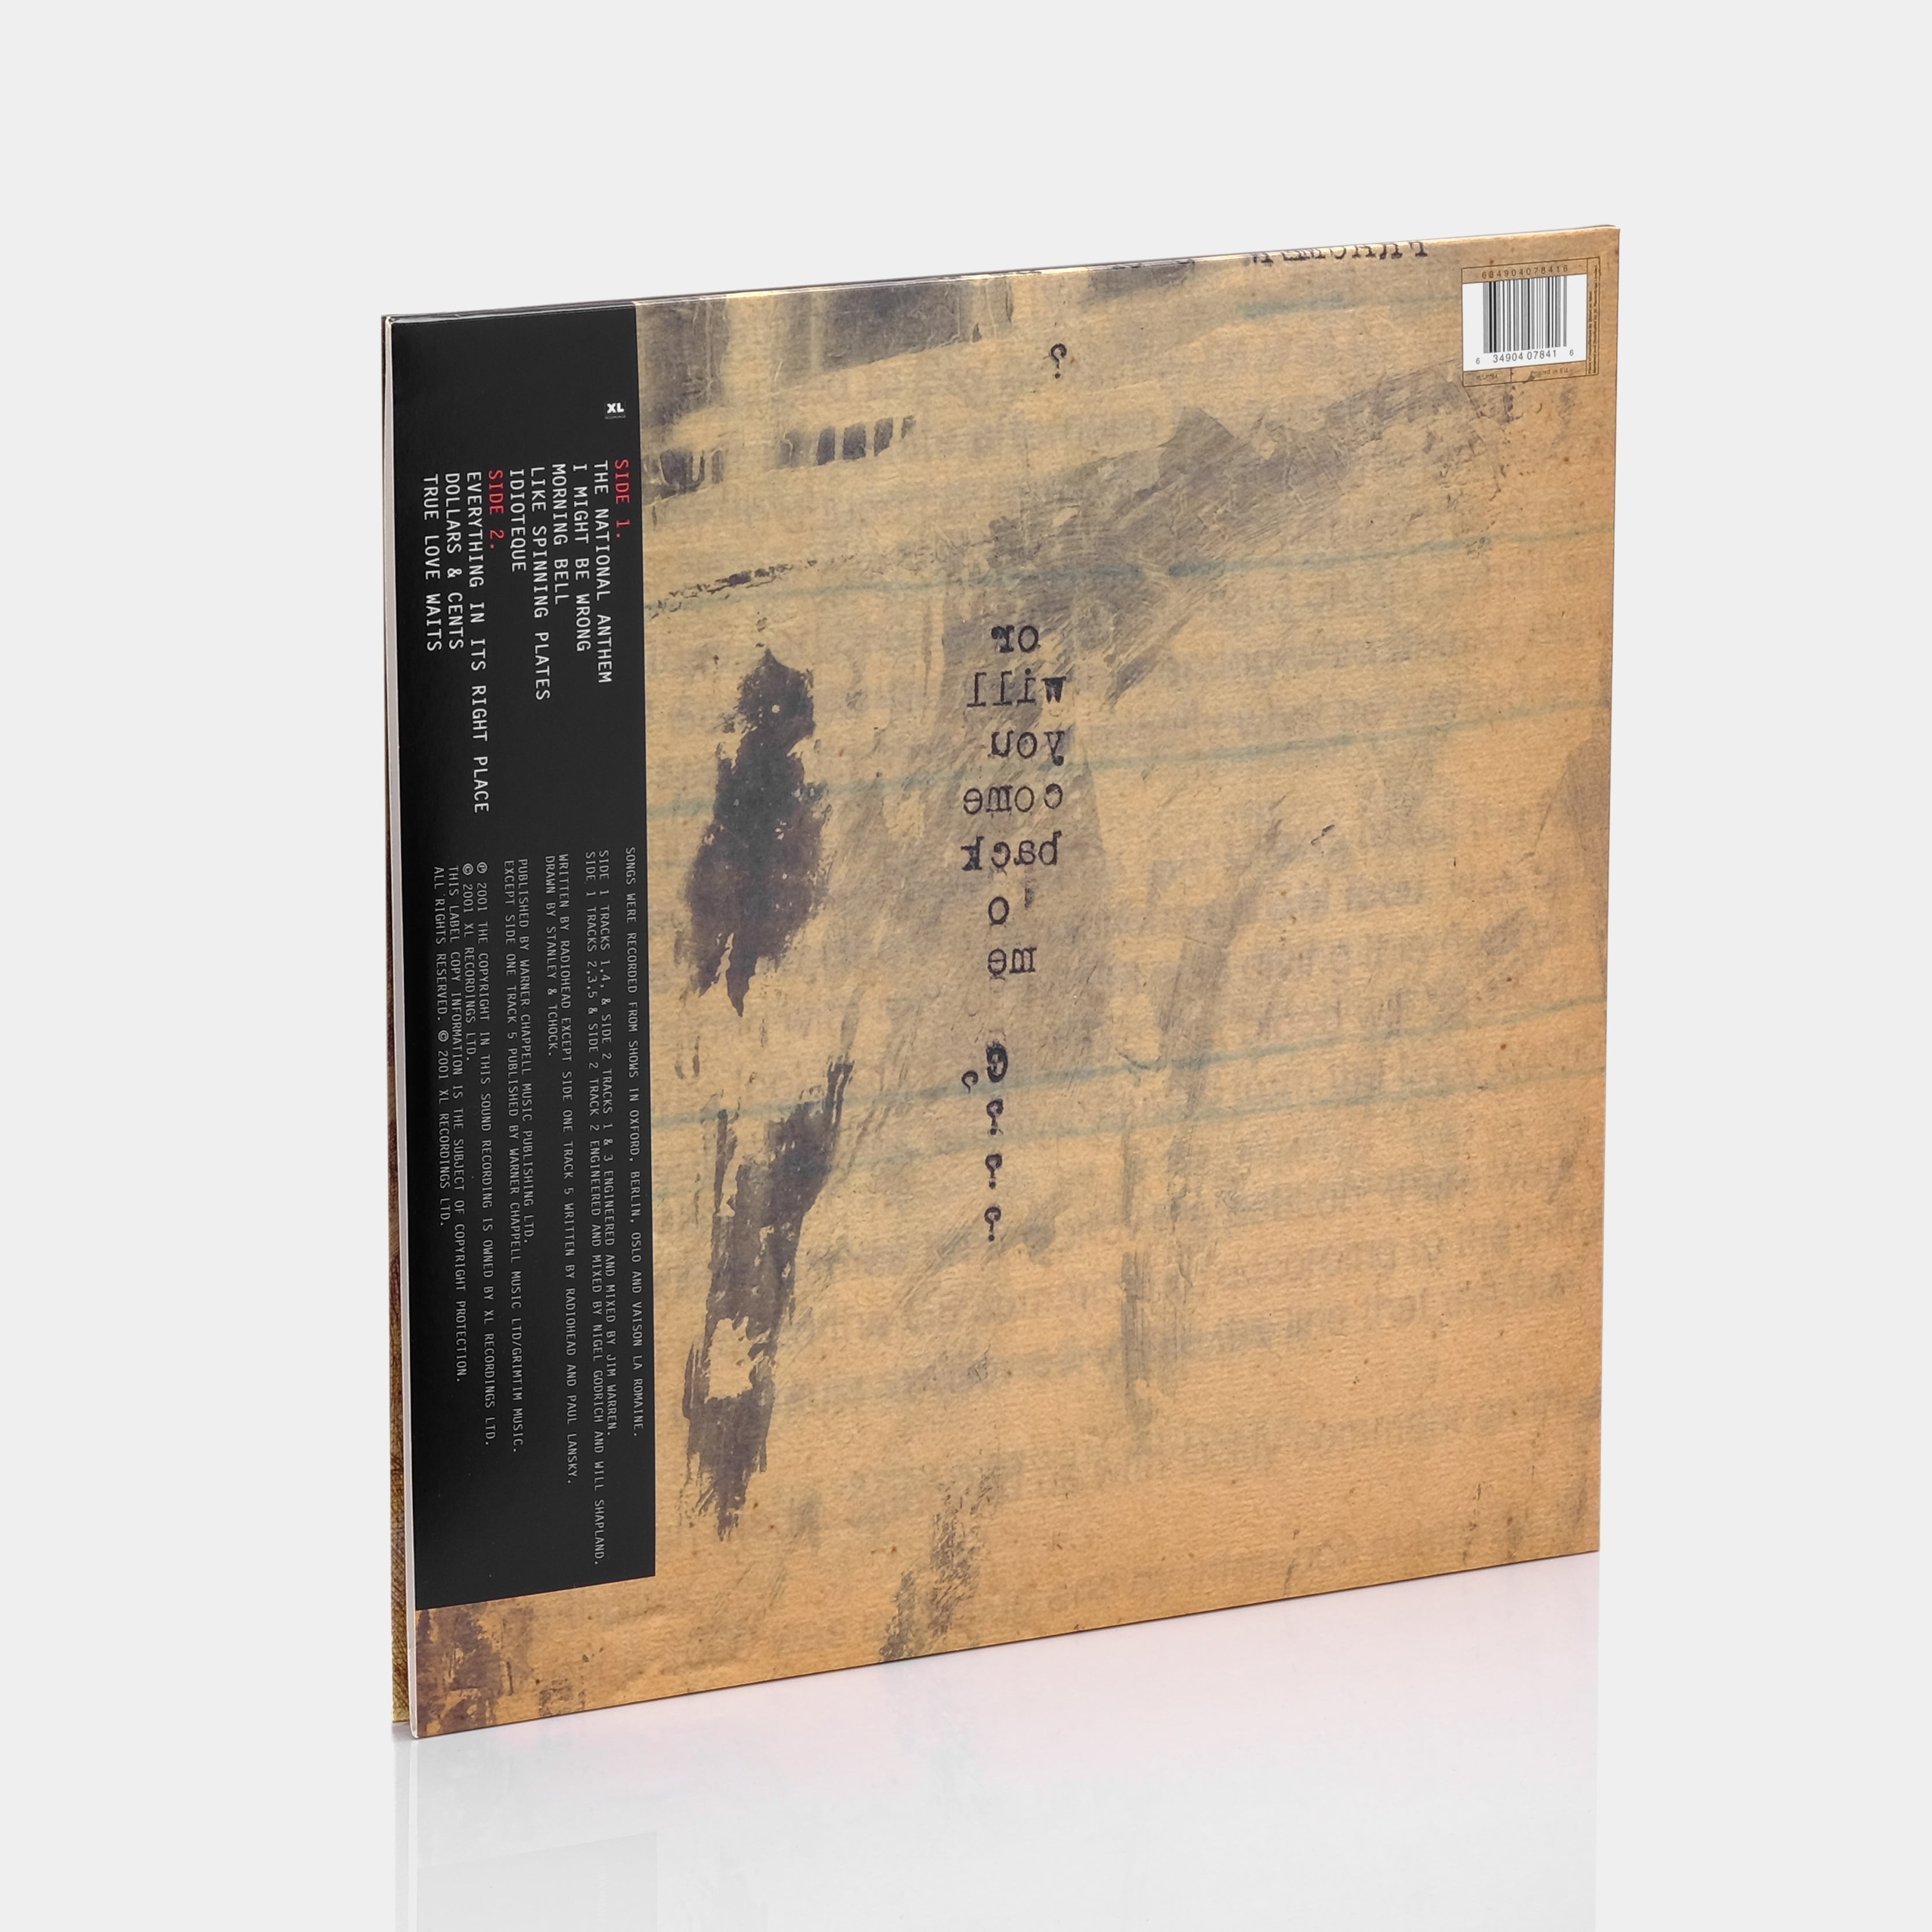 Radiohead - I Might Be Wrong - Live Recordings LP Vinyl Record